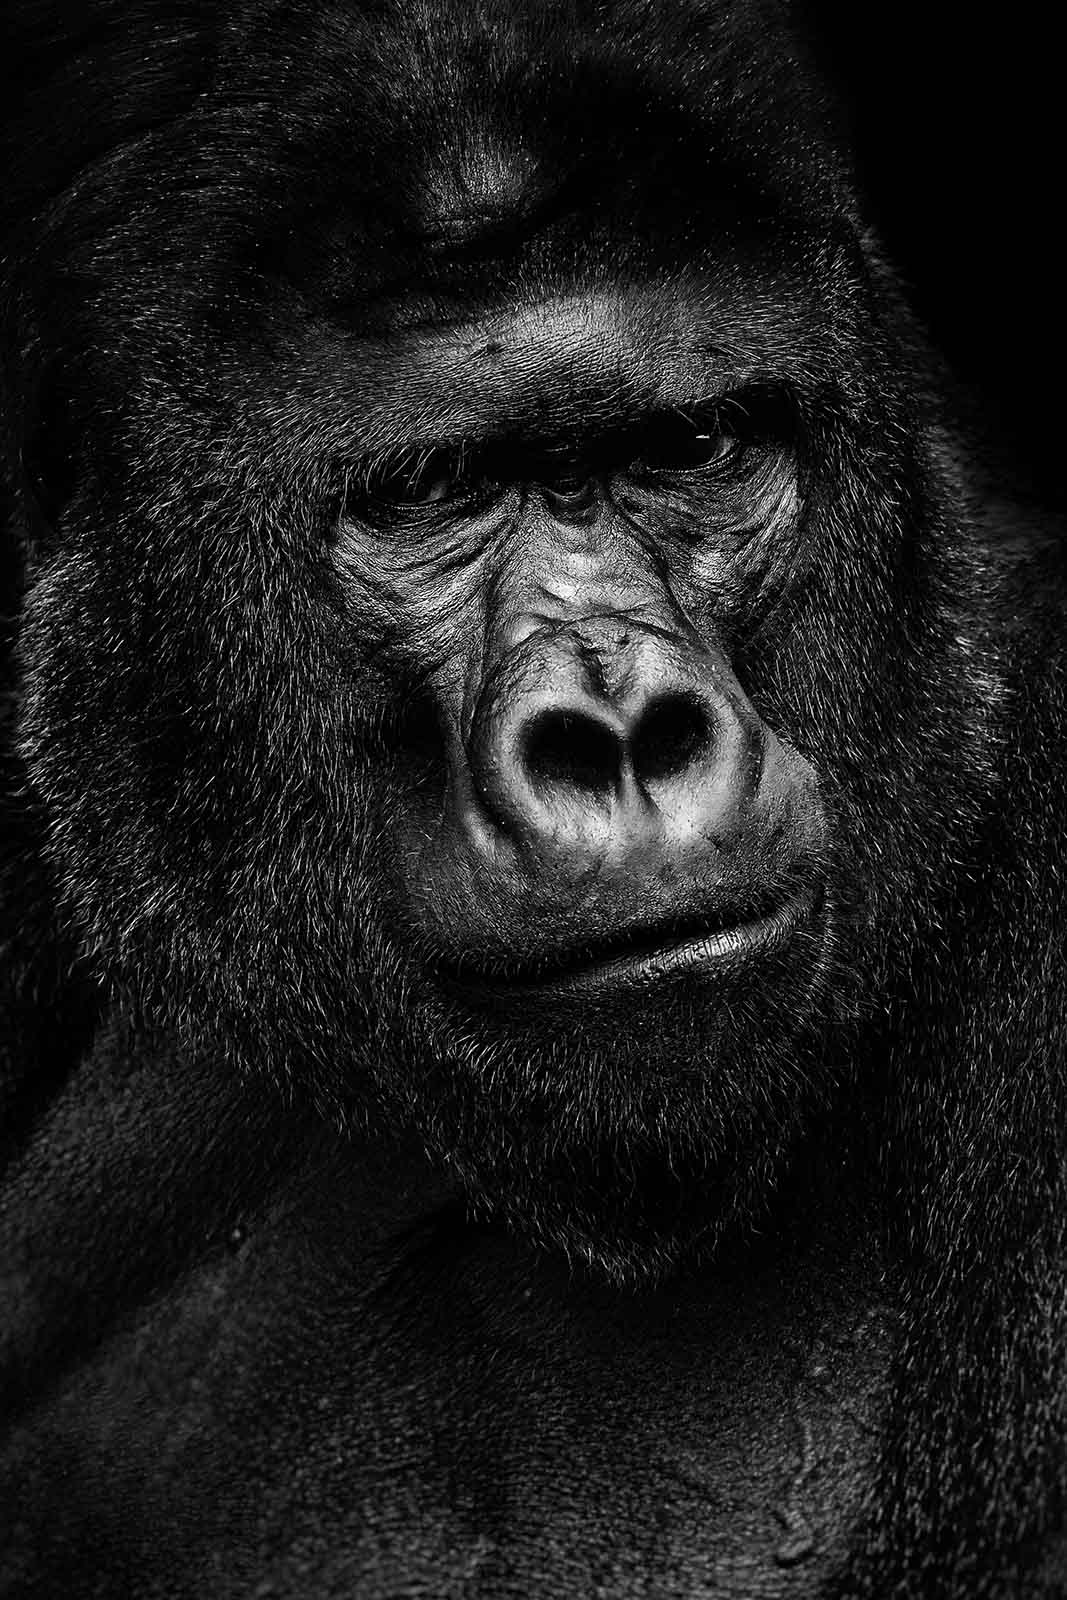 Gorilla portrait - dieren op wanddecoratie